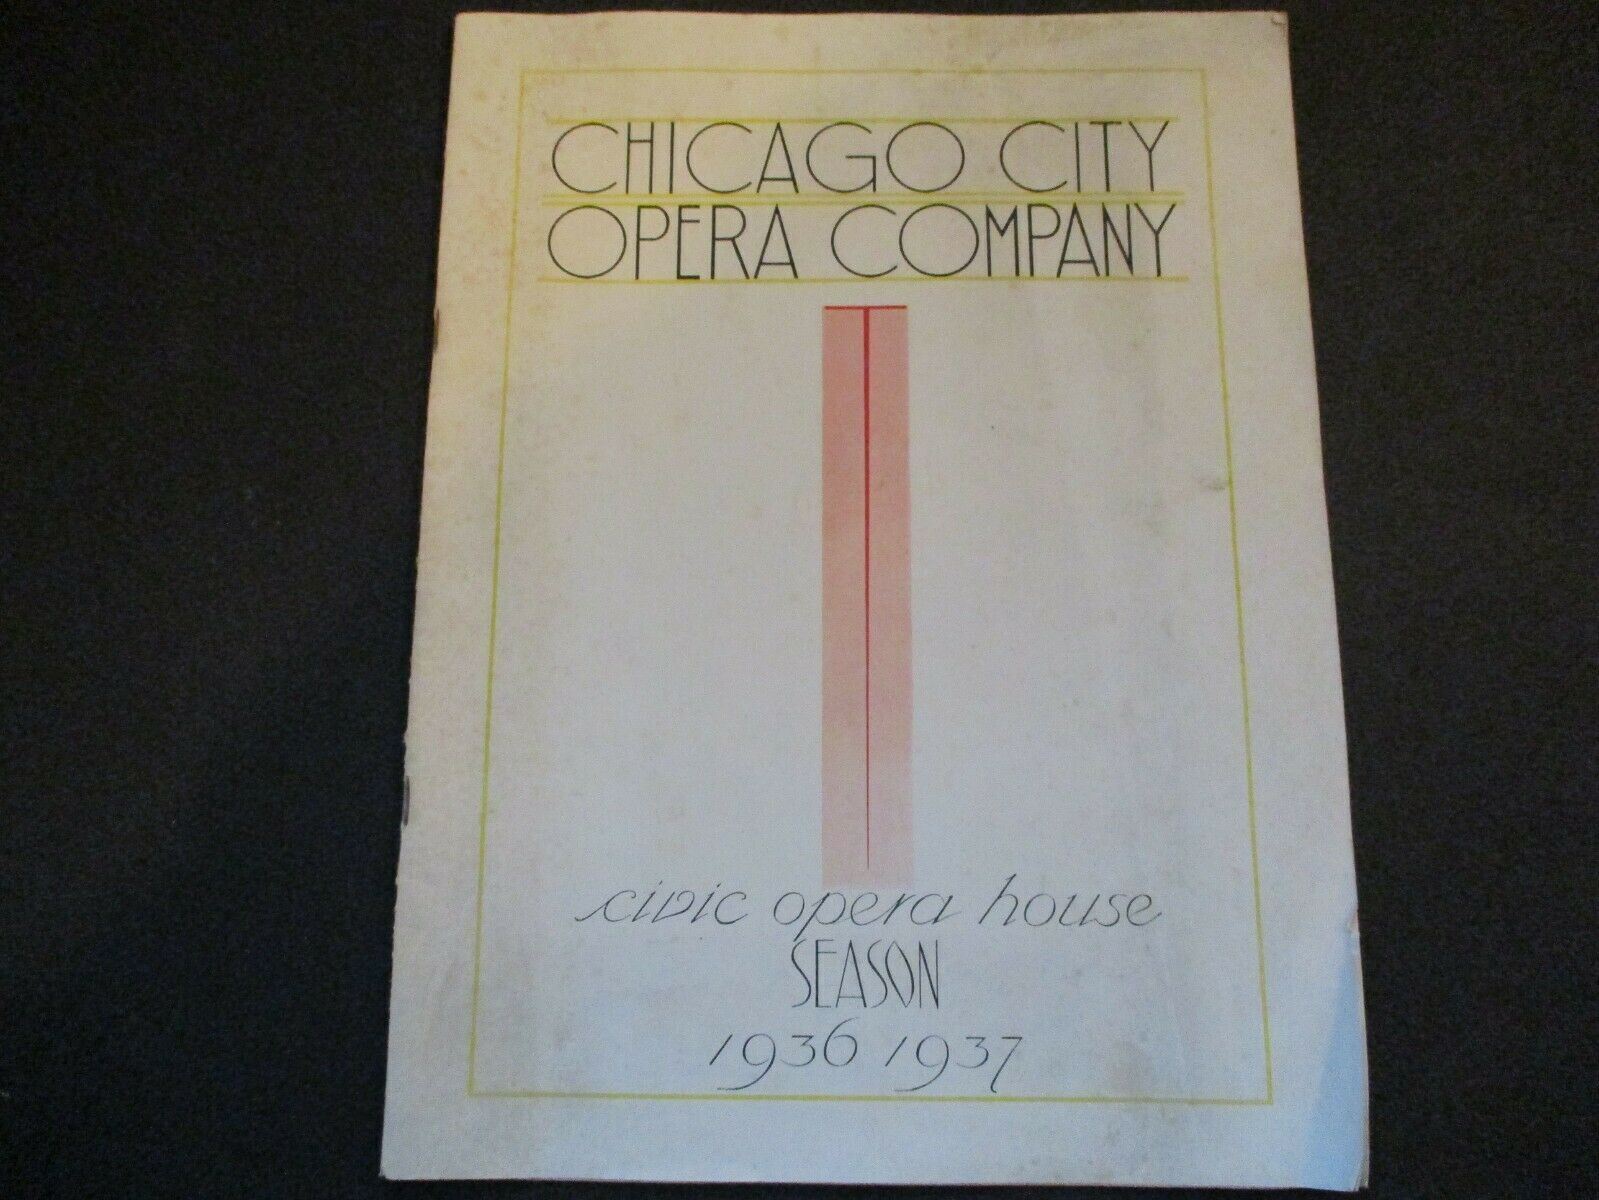 1936-1937 Chicago City Opera Company pamphlet